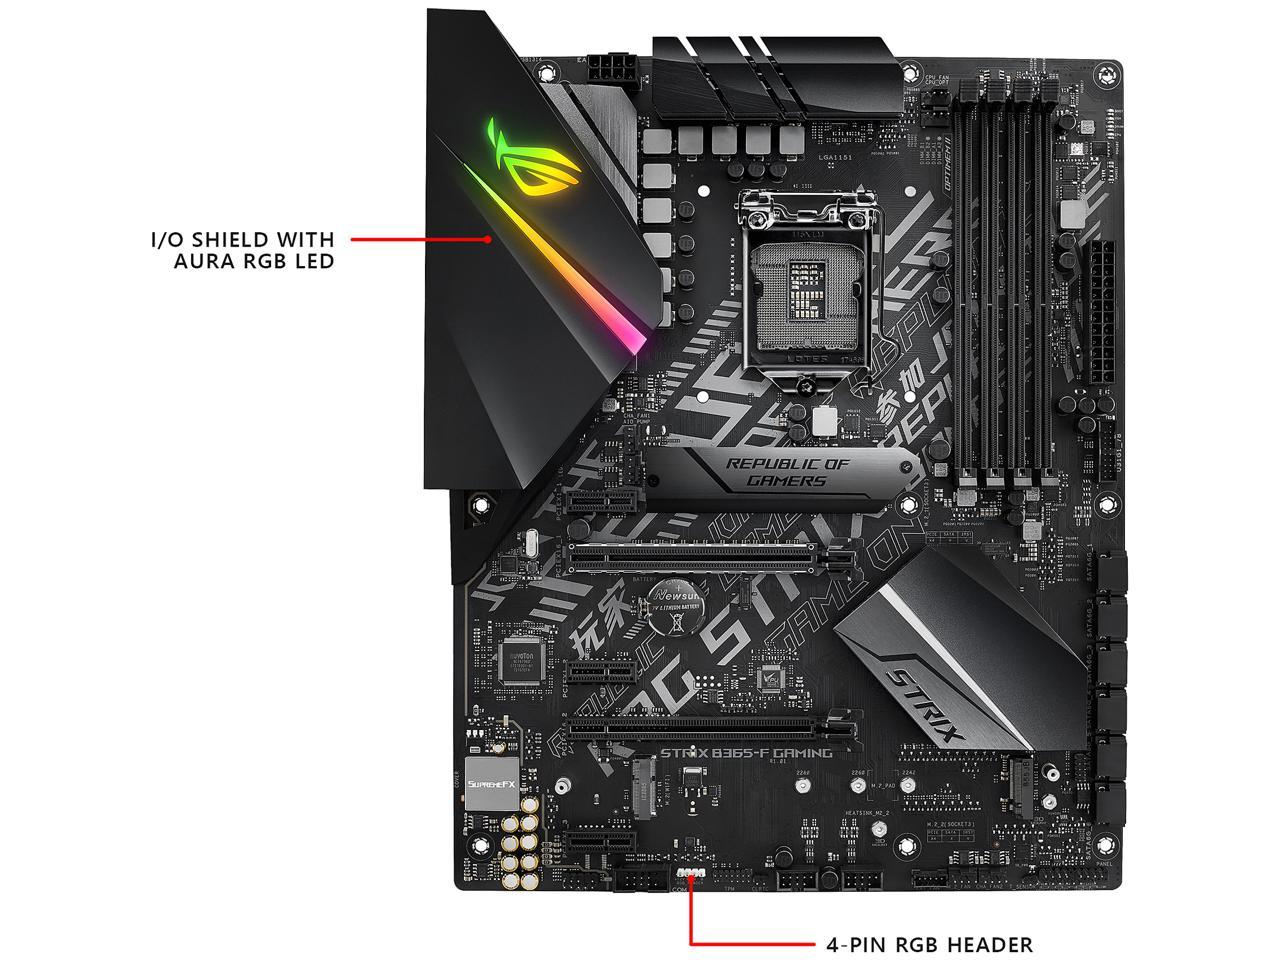 ASUS ROG STRIX B365-F GAMING Support 9th/8th Gen Intel Processor with Aura Sync RGB, Dual M.2, DisplayPort, HDMI, DVI, SATA 6Gbps and USB 3.1 Gen 2 ATX Gaming Motherboard